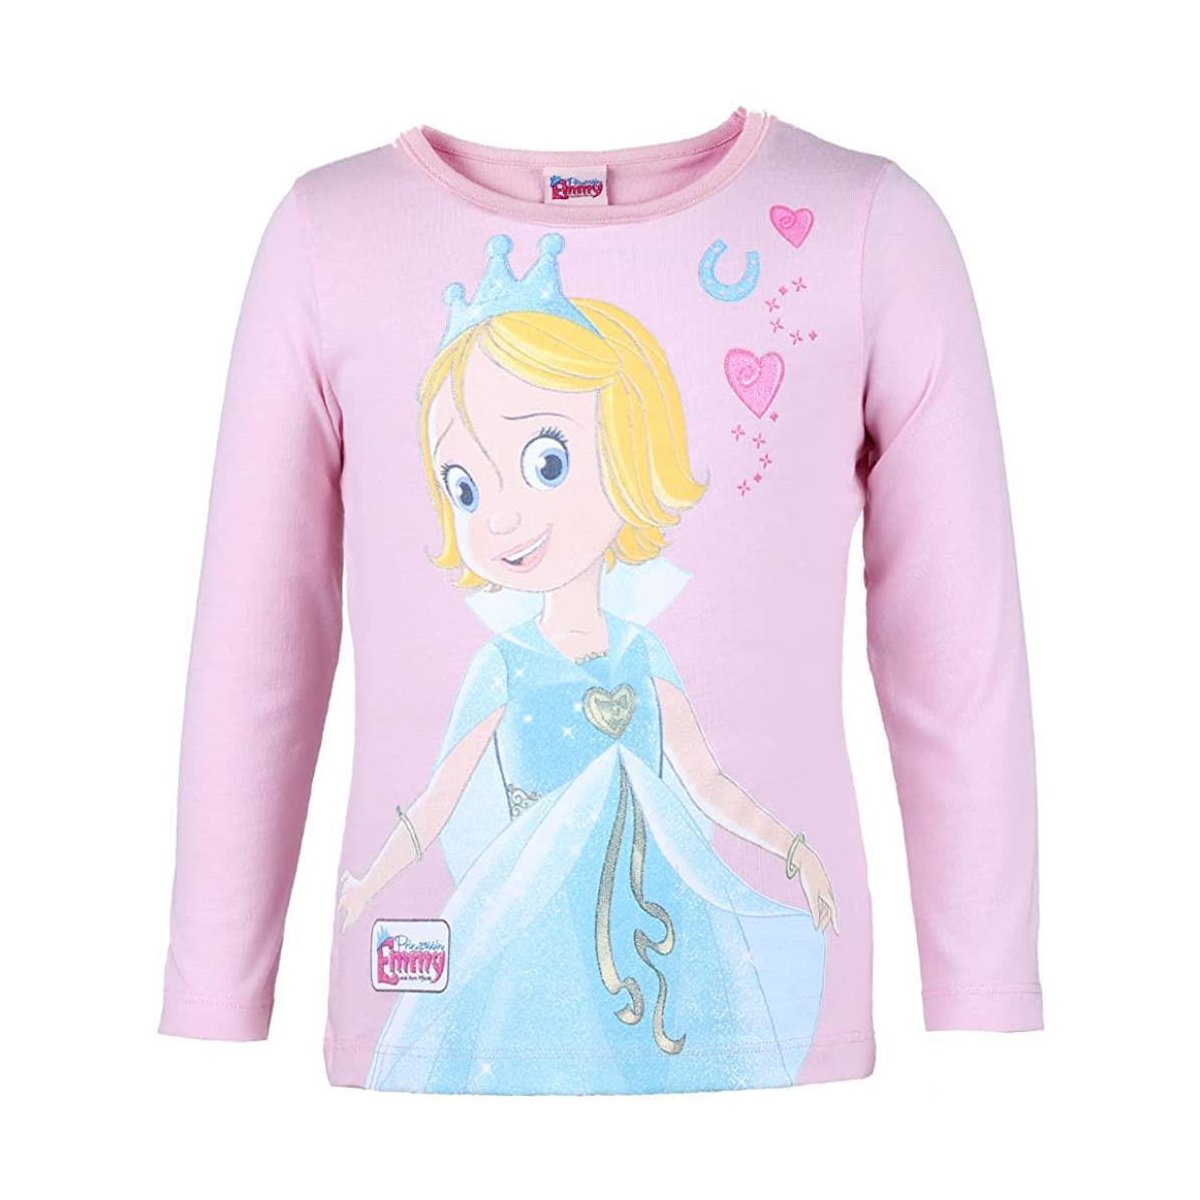 Prinzessin Emmy Langarmshirt Shirt mit Glitzer, rosa